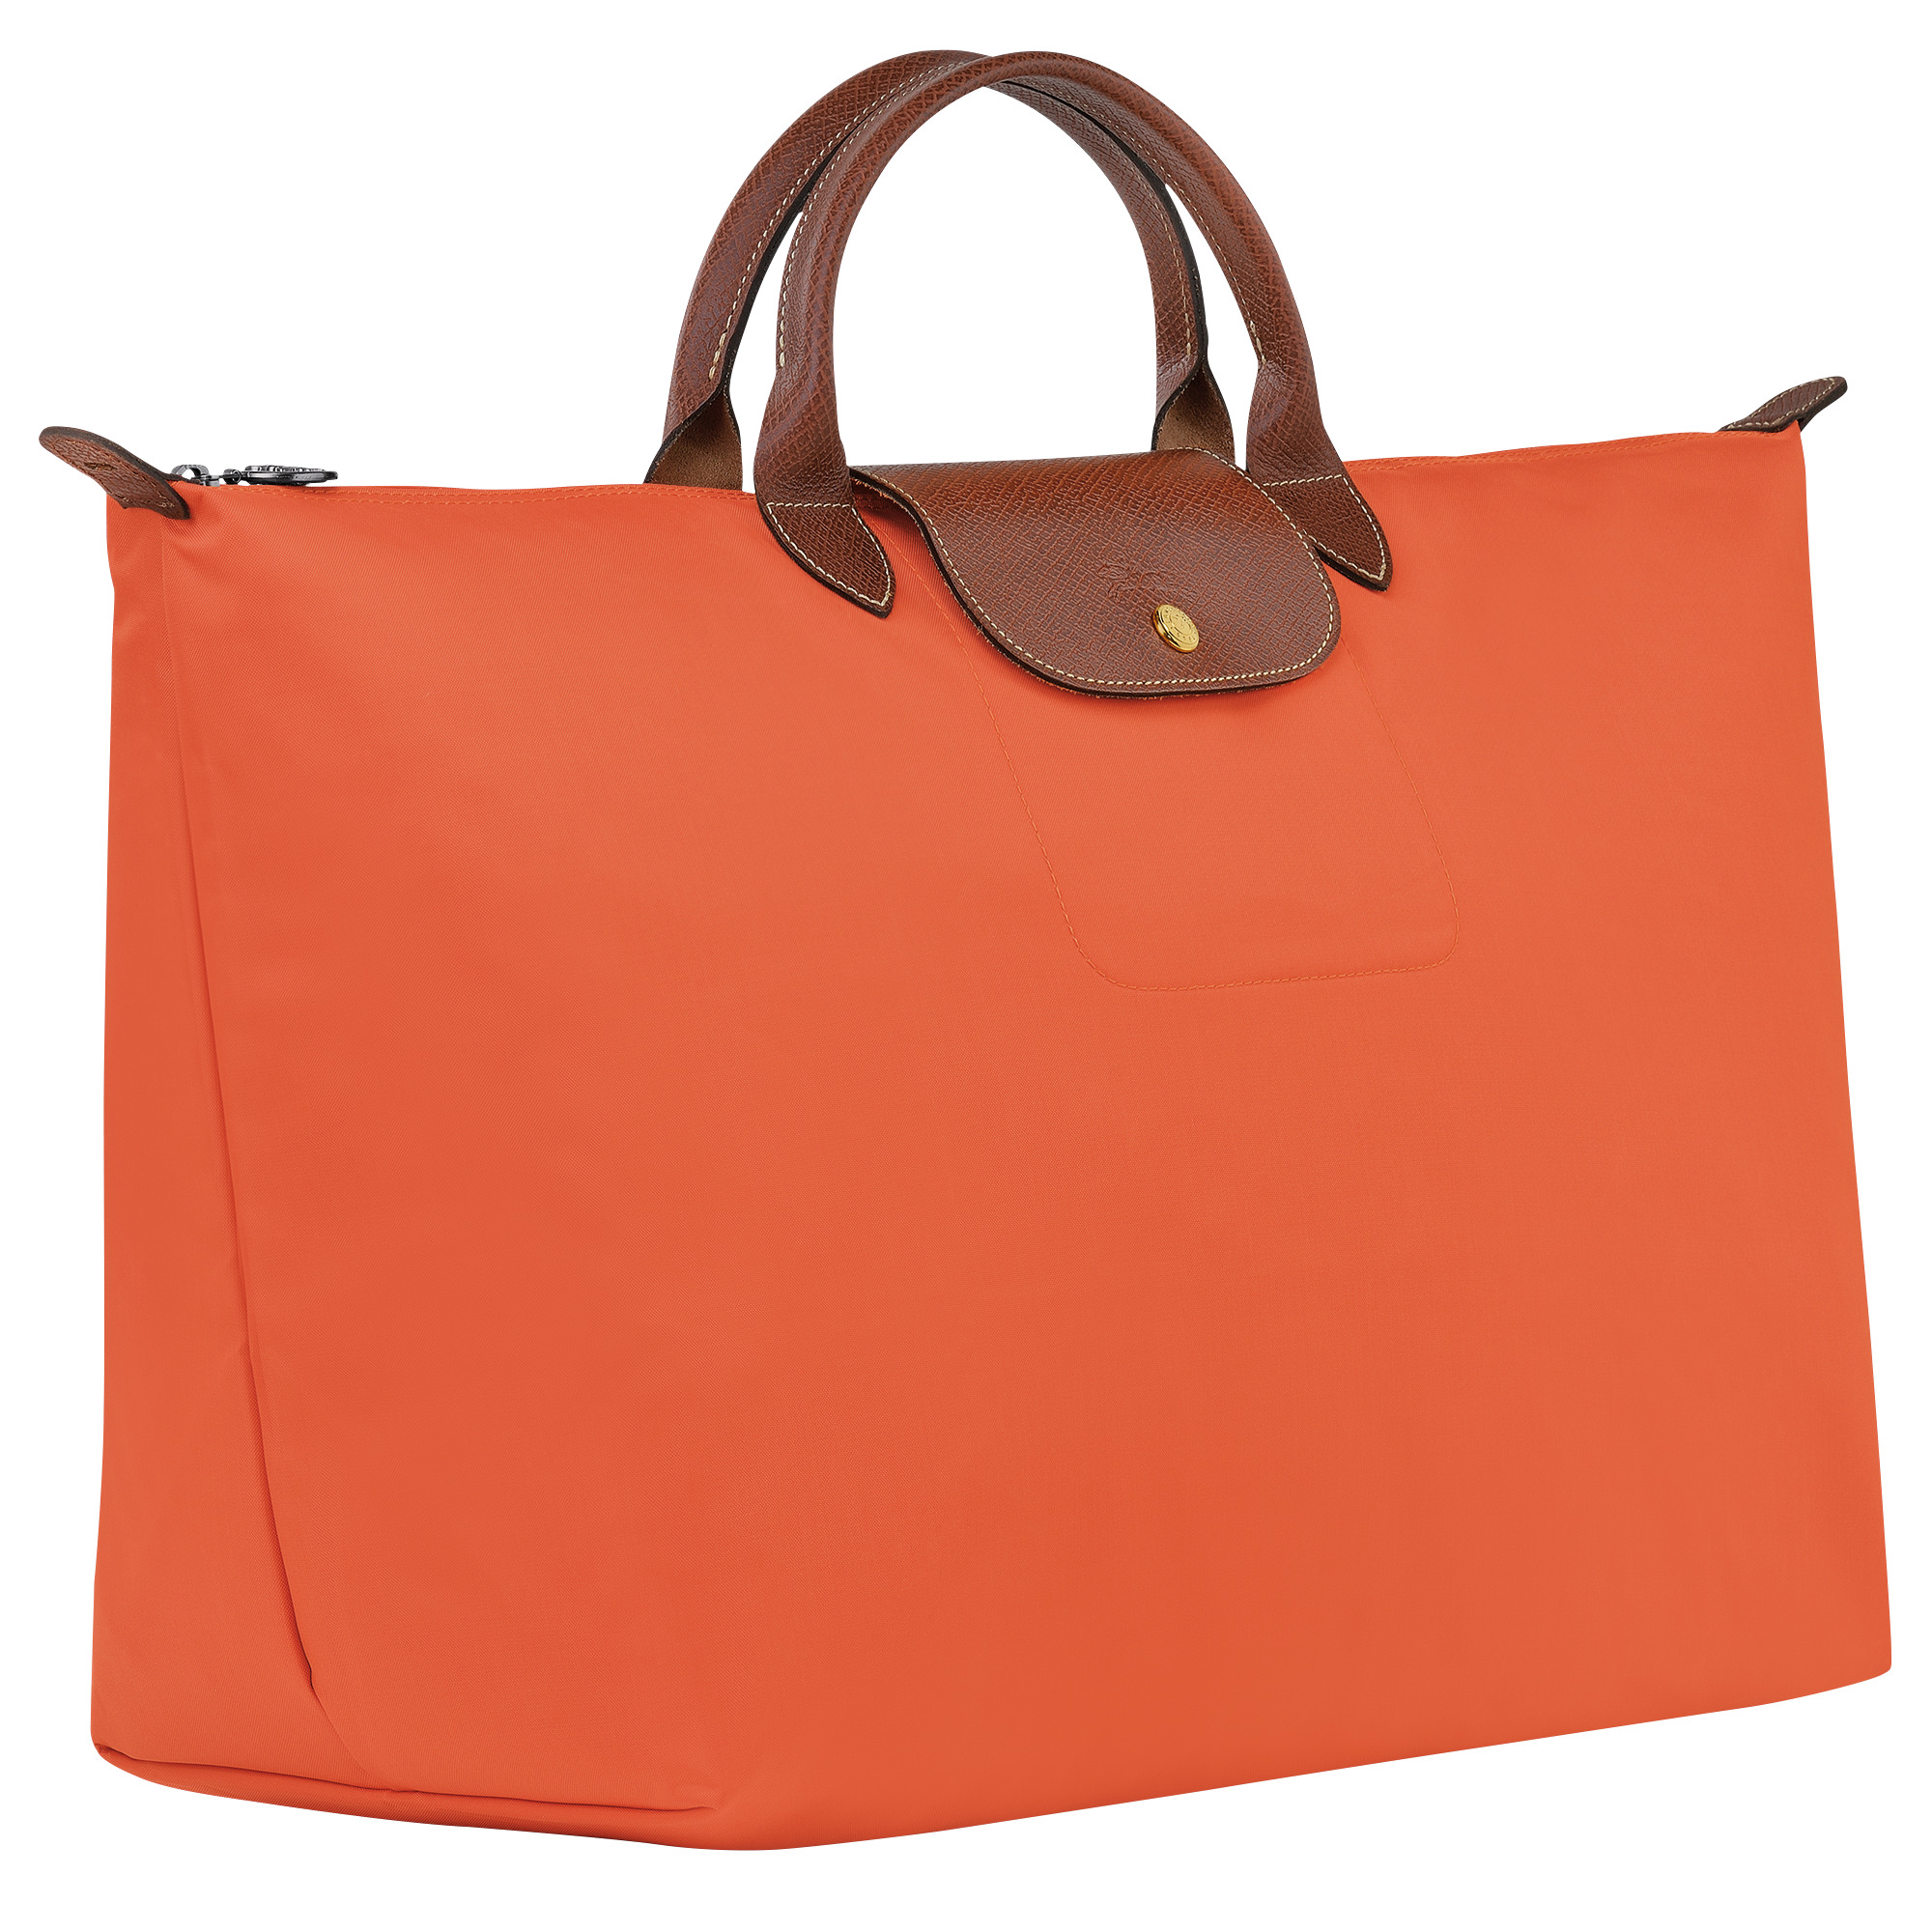 Le Pliage Original S Travel bag Orange - Recycled canvas - 3